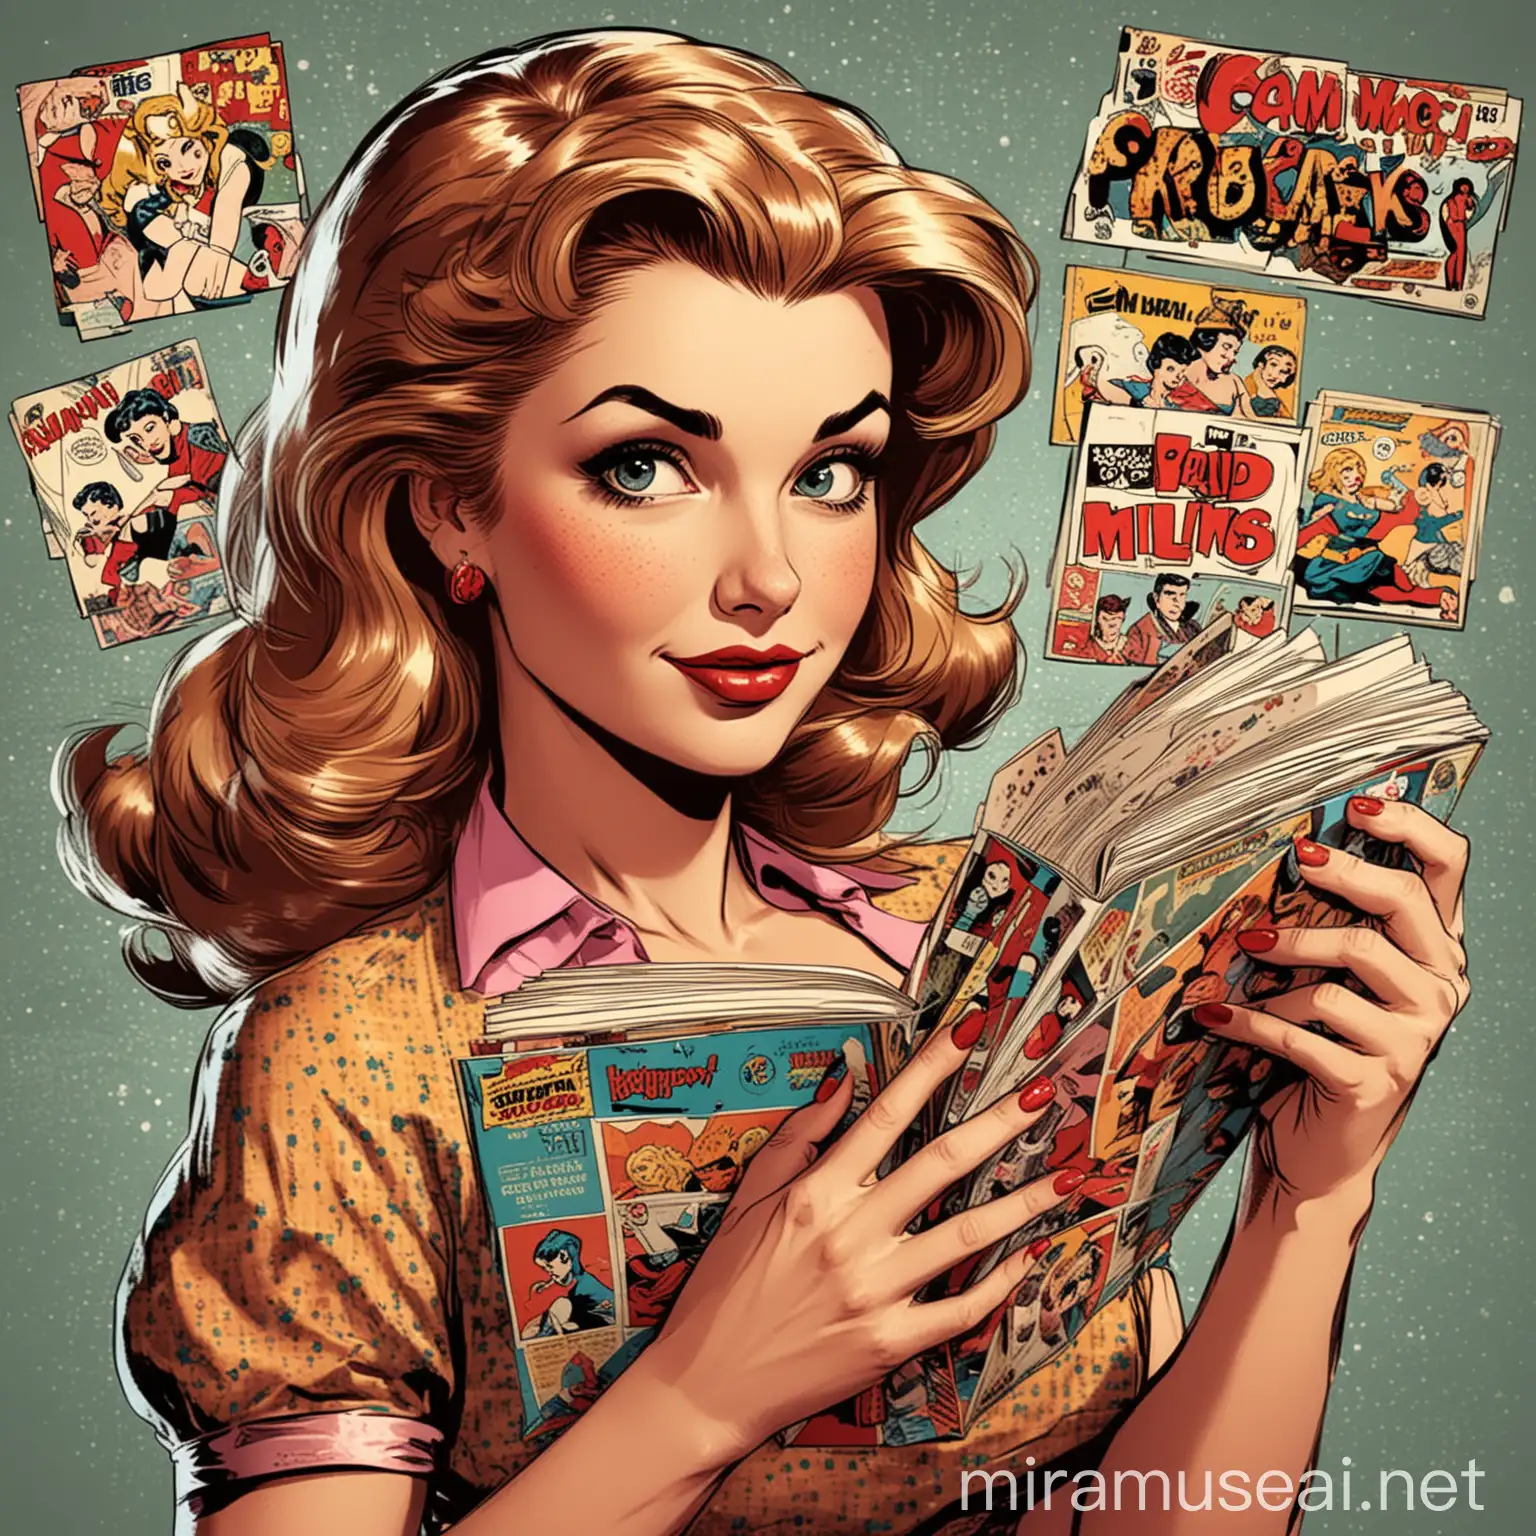 Retro Comic Book Woman Holding Comics Vintage 50s Style Art